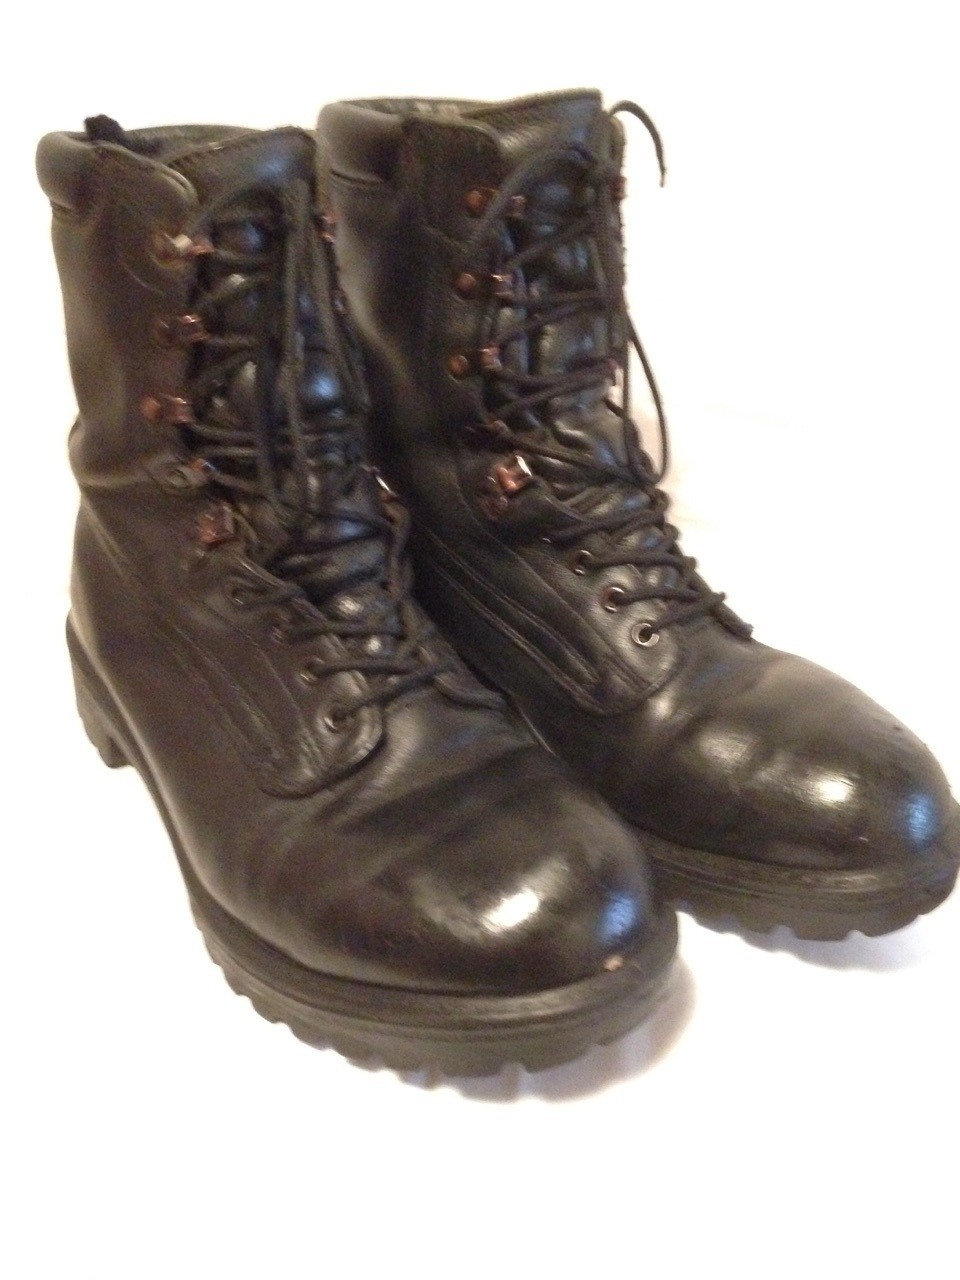 British Army Pro Boots Size 11M